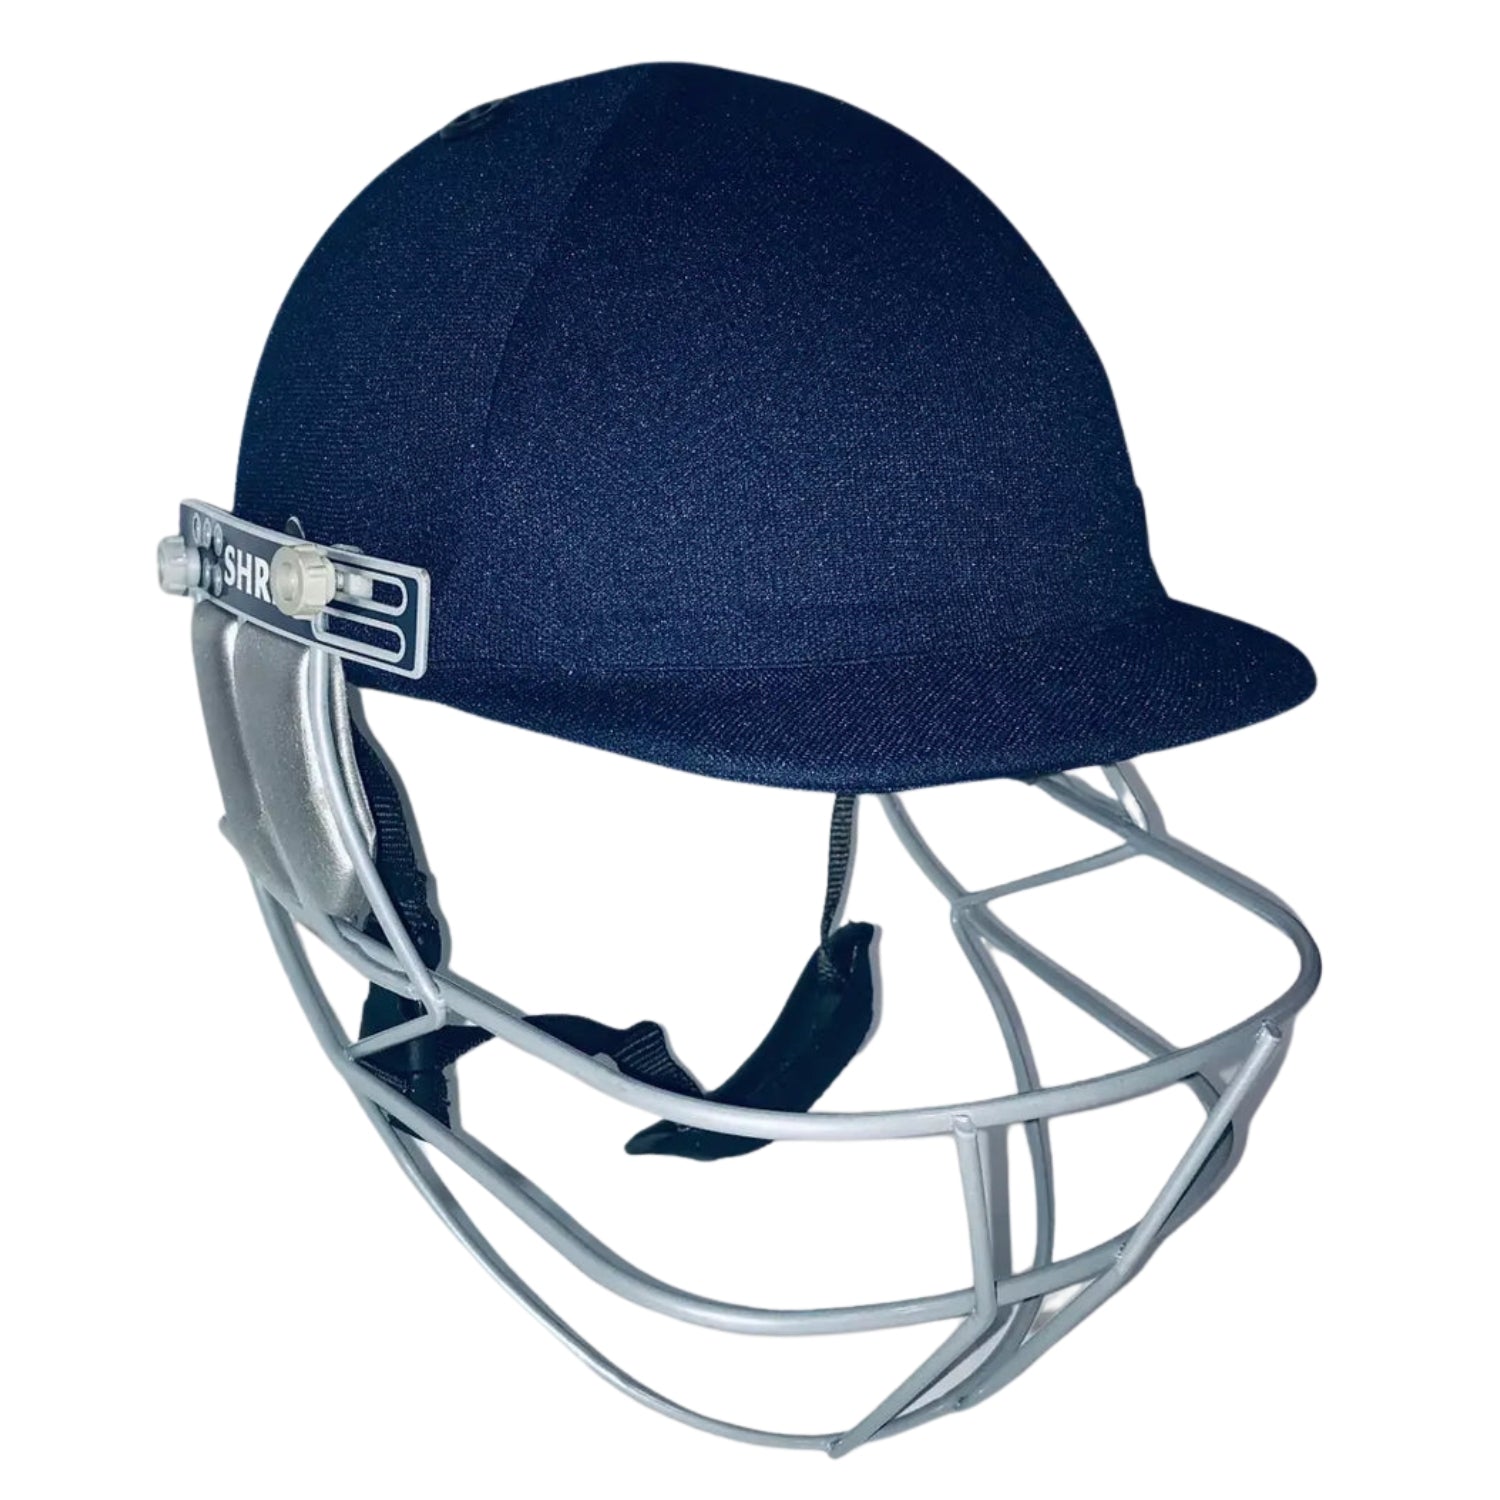 Shrey Batting Helmet, Model 2.0 Match, Adult Navy Blue